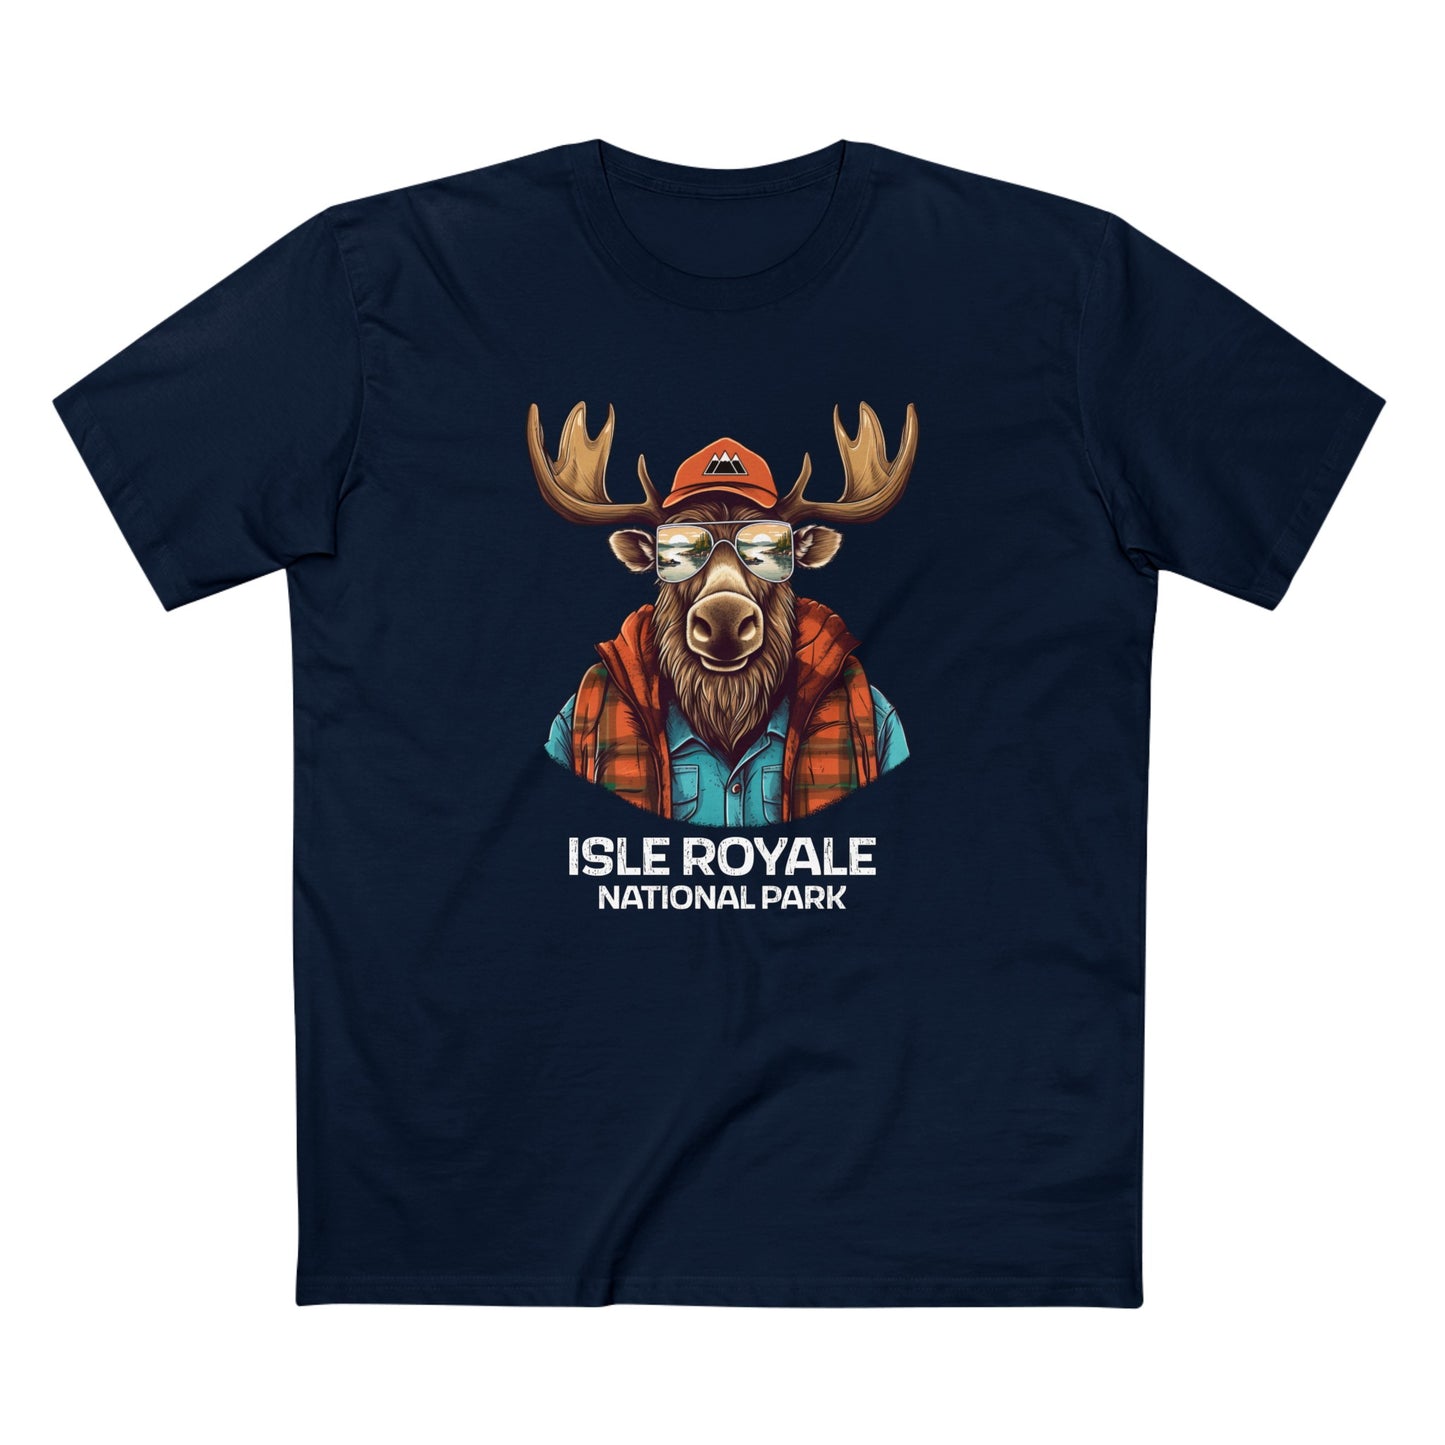 Isle Royale National Park T-Shirt - Cool Moose